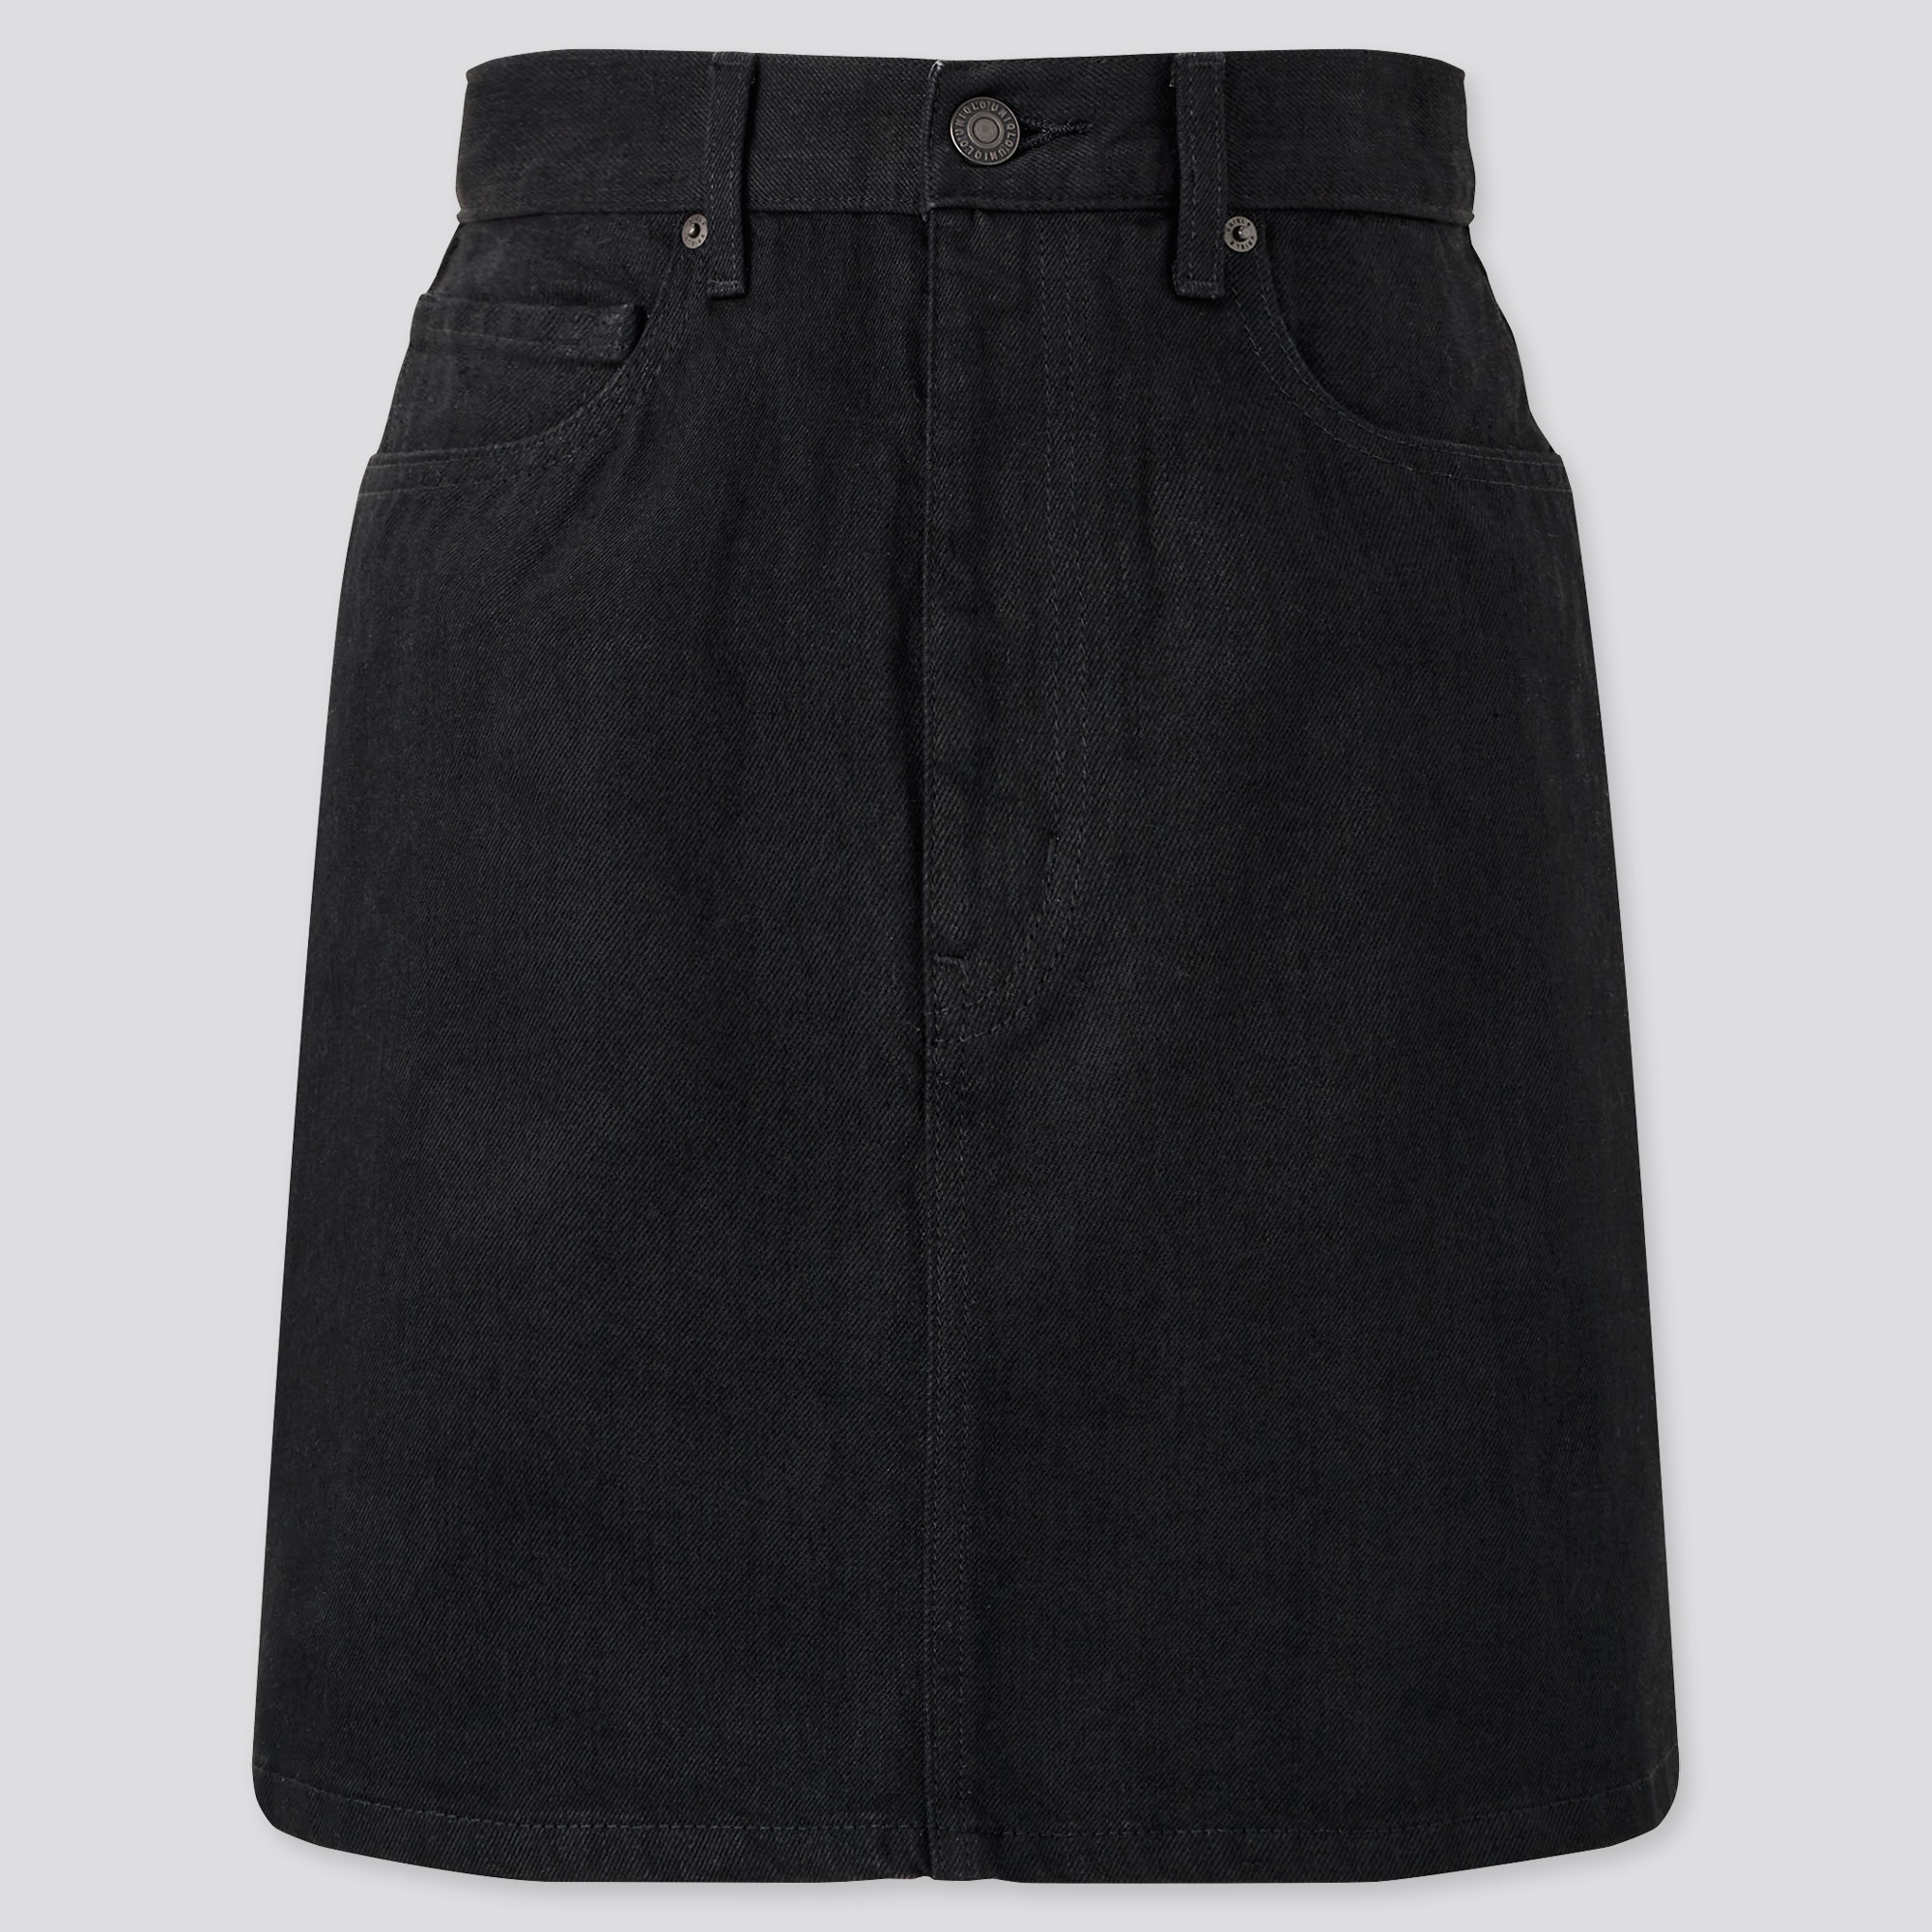 grey denim mini skirt uk